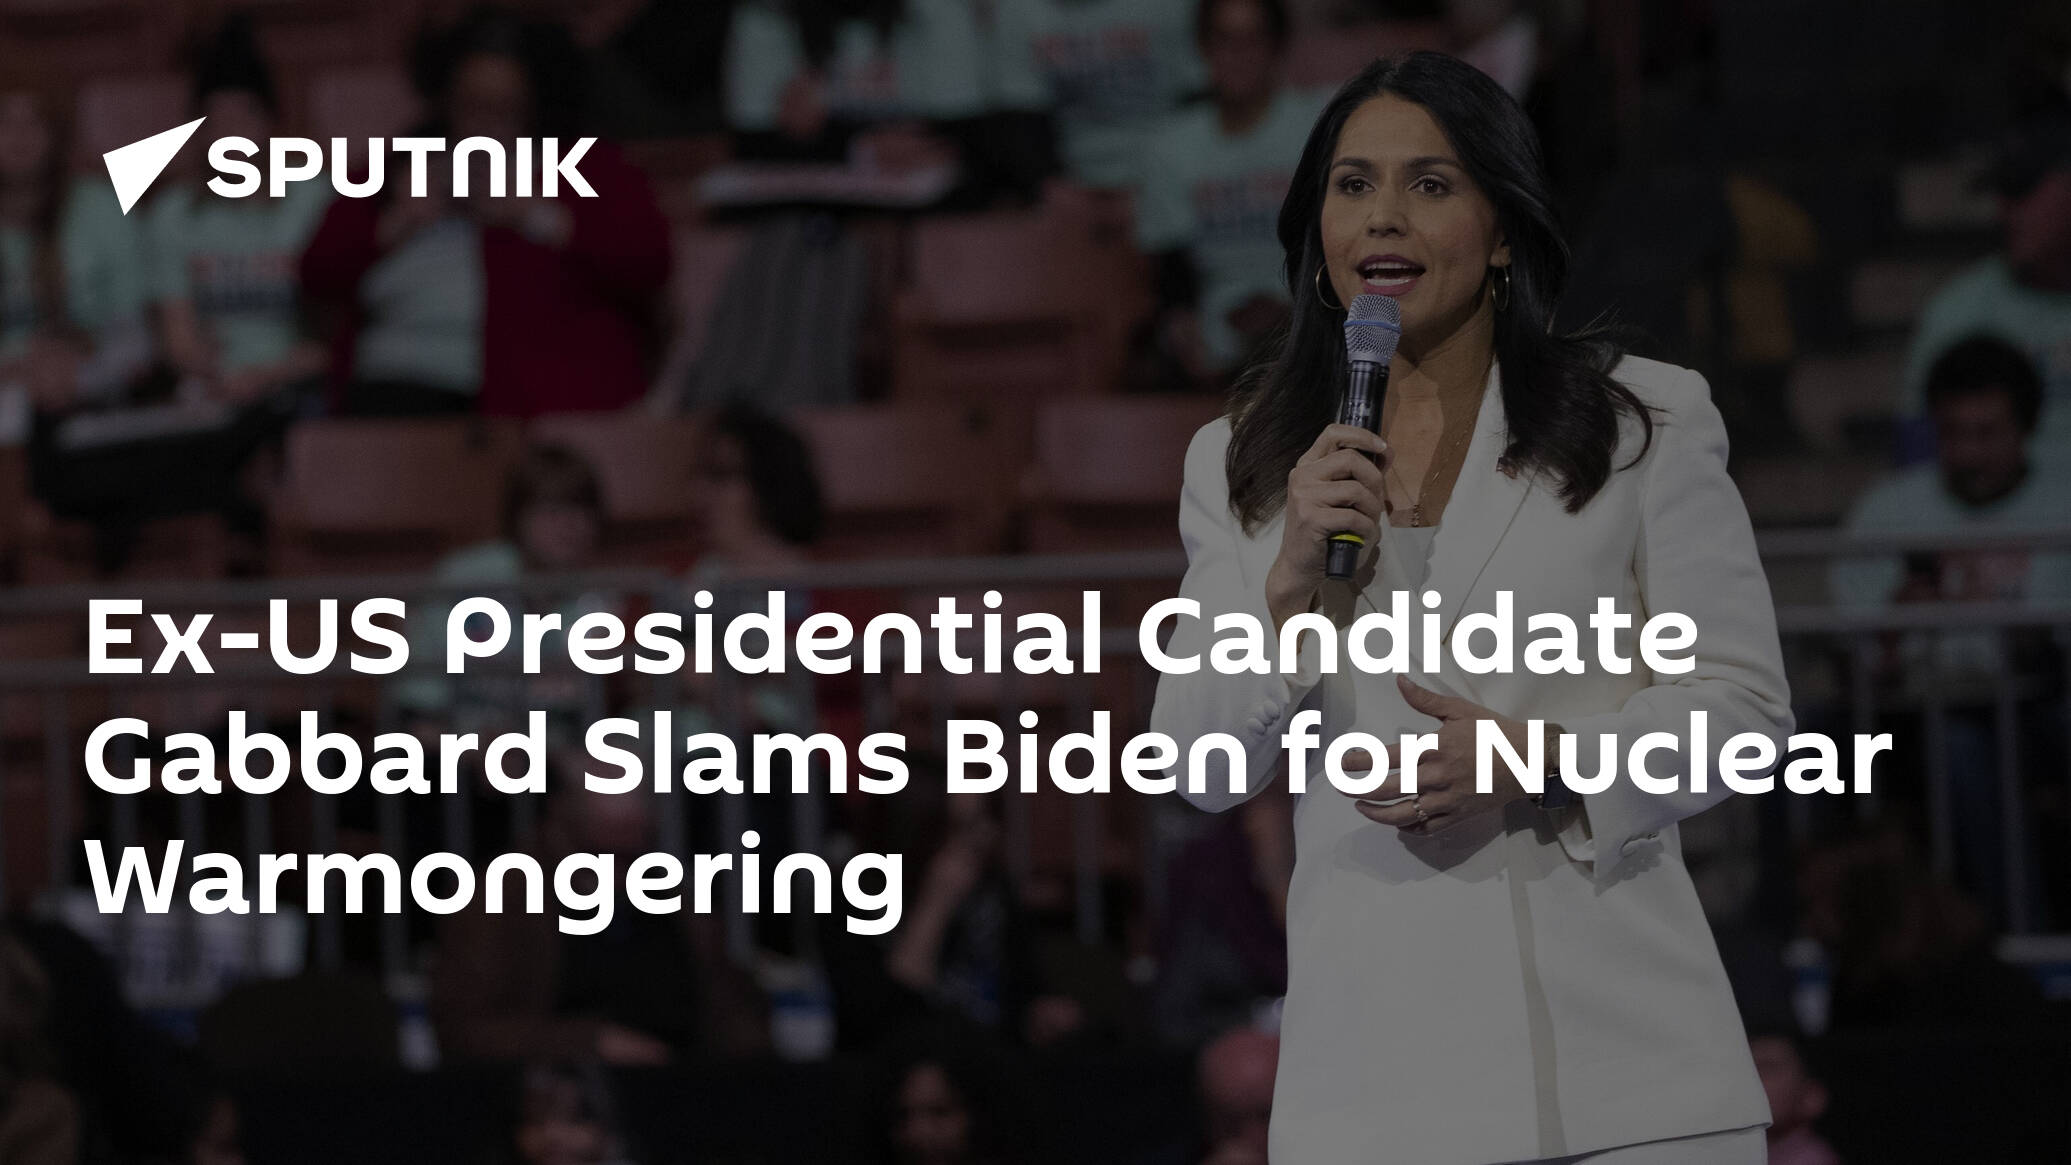 Ex-US Presidential Candidate Gabbard Slams Biden for Nuclear Warmongering